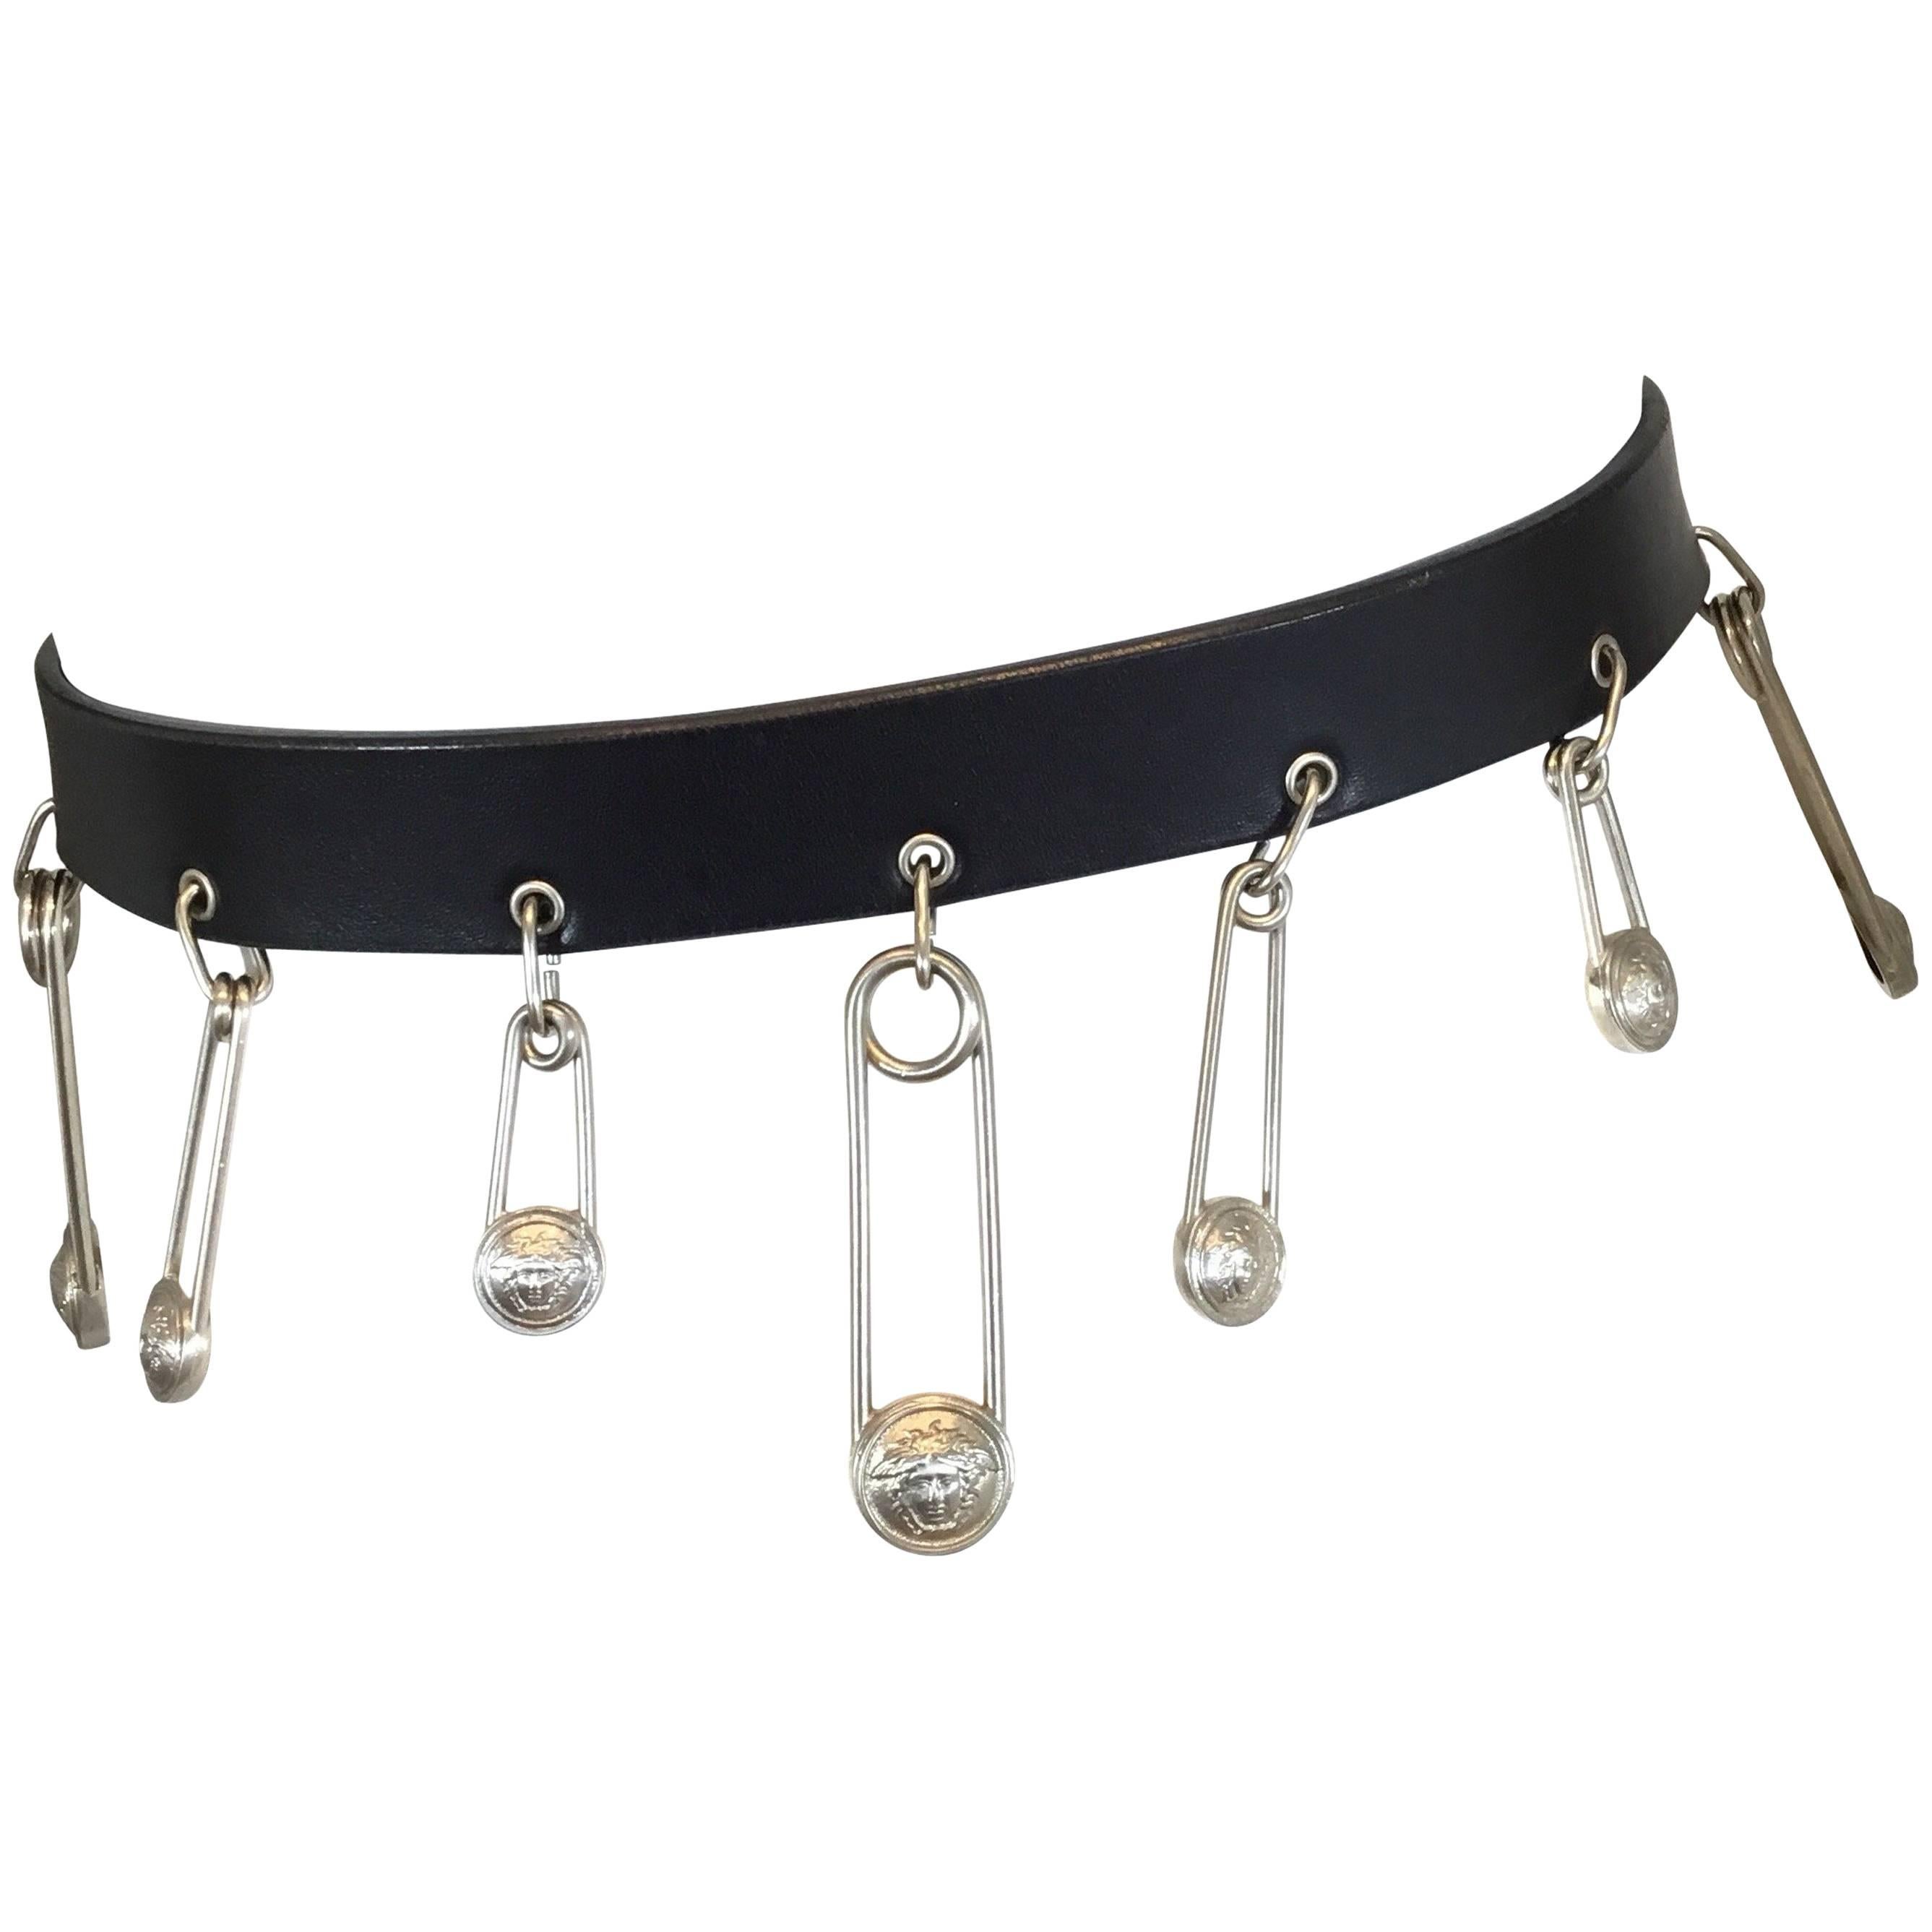 Gianni Versace Medusa Safety Pin Leather Belt